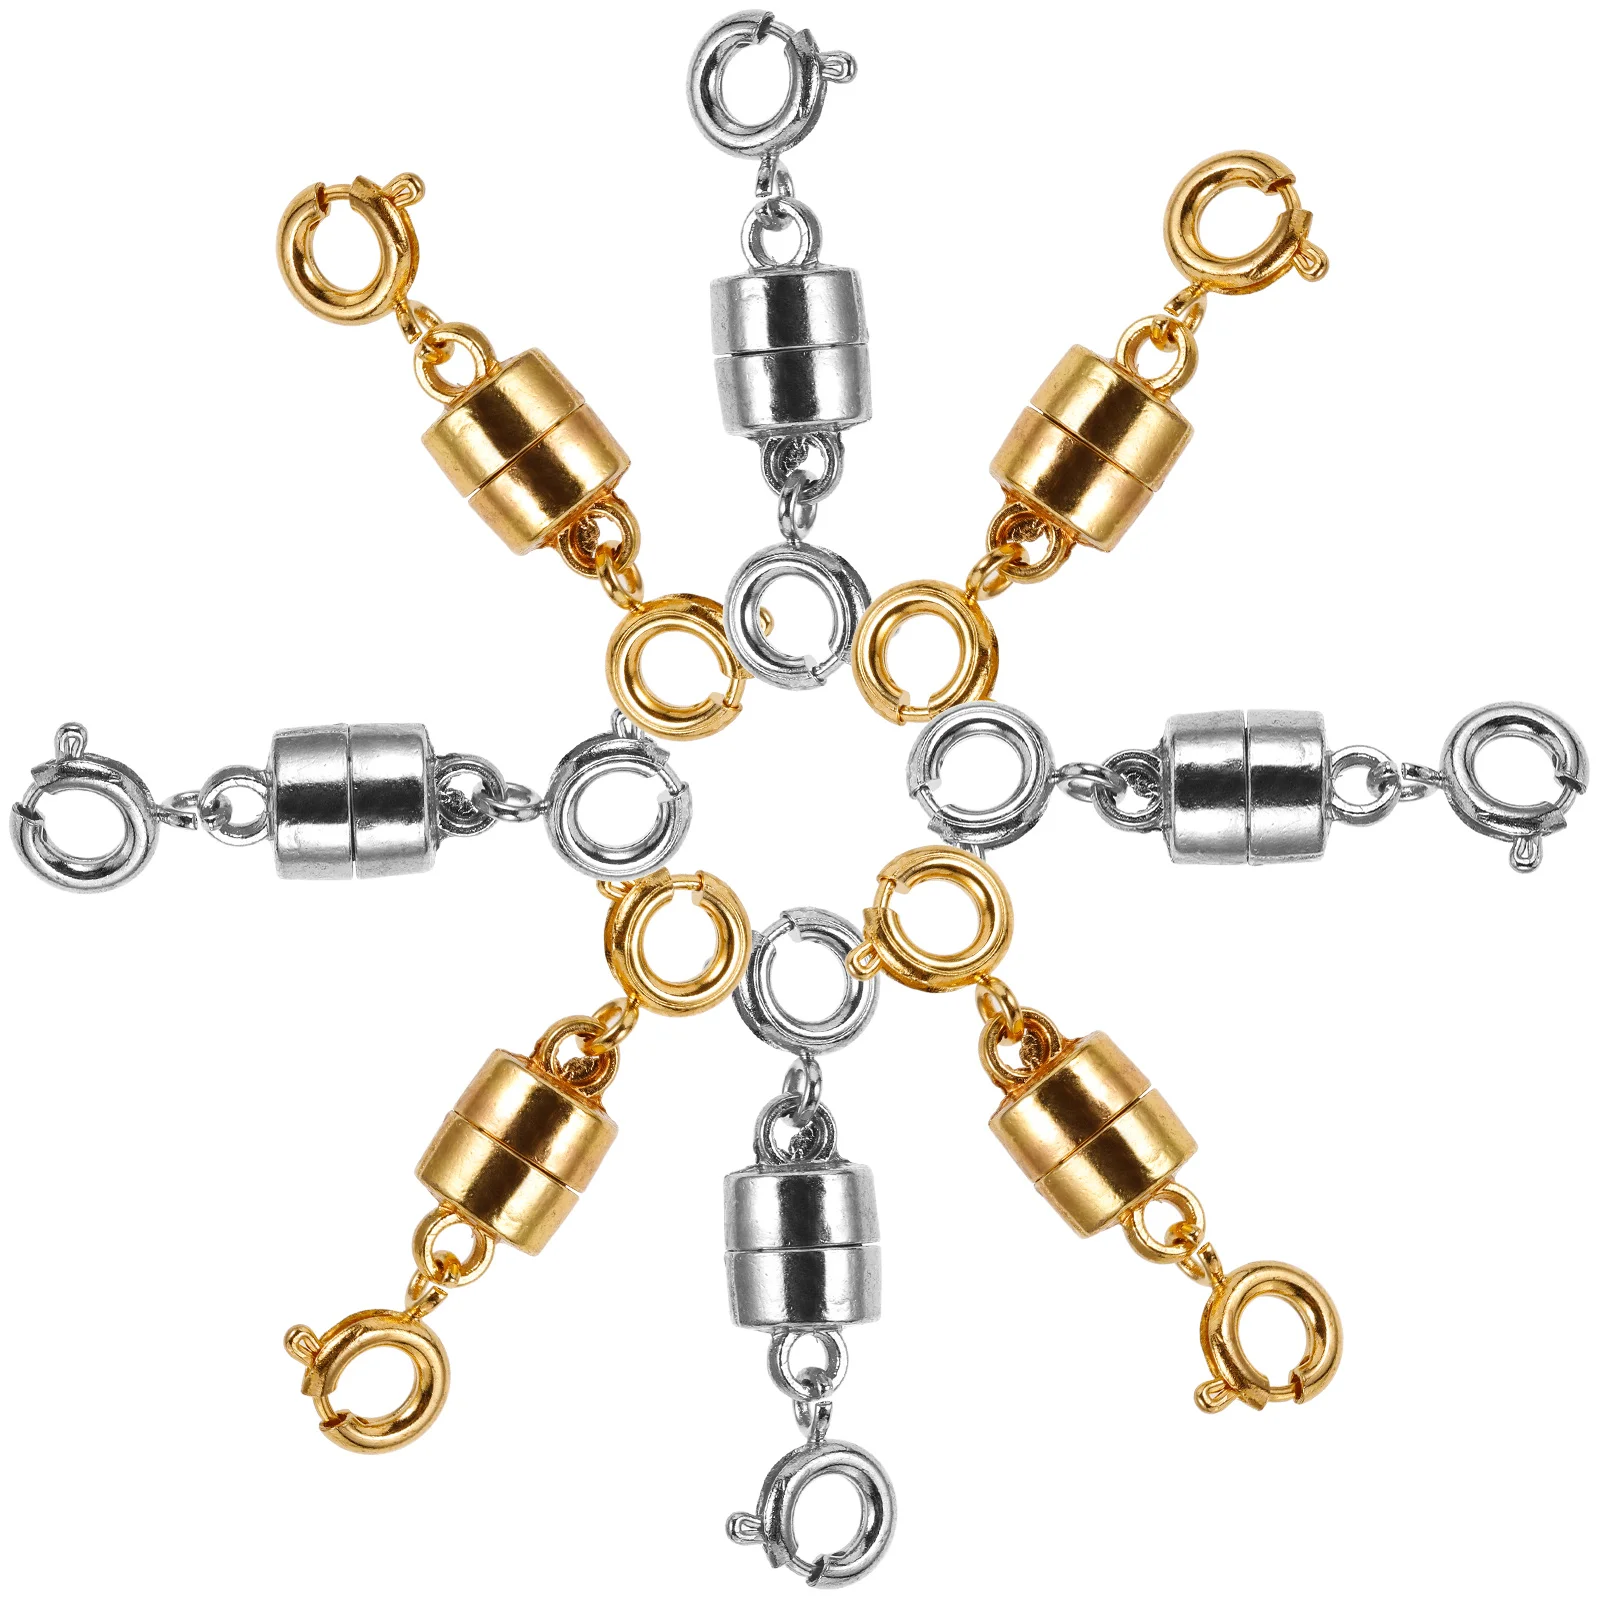 

8 Pcs Necklace Extender Jewelry DIY Clasp Magnet Connectors Bracelet Alloy Magnetic Jewlery Magnets Clasps Necklaces